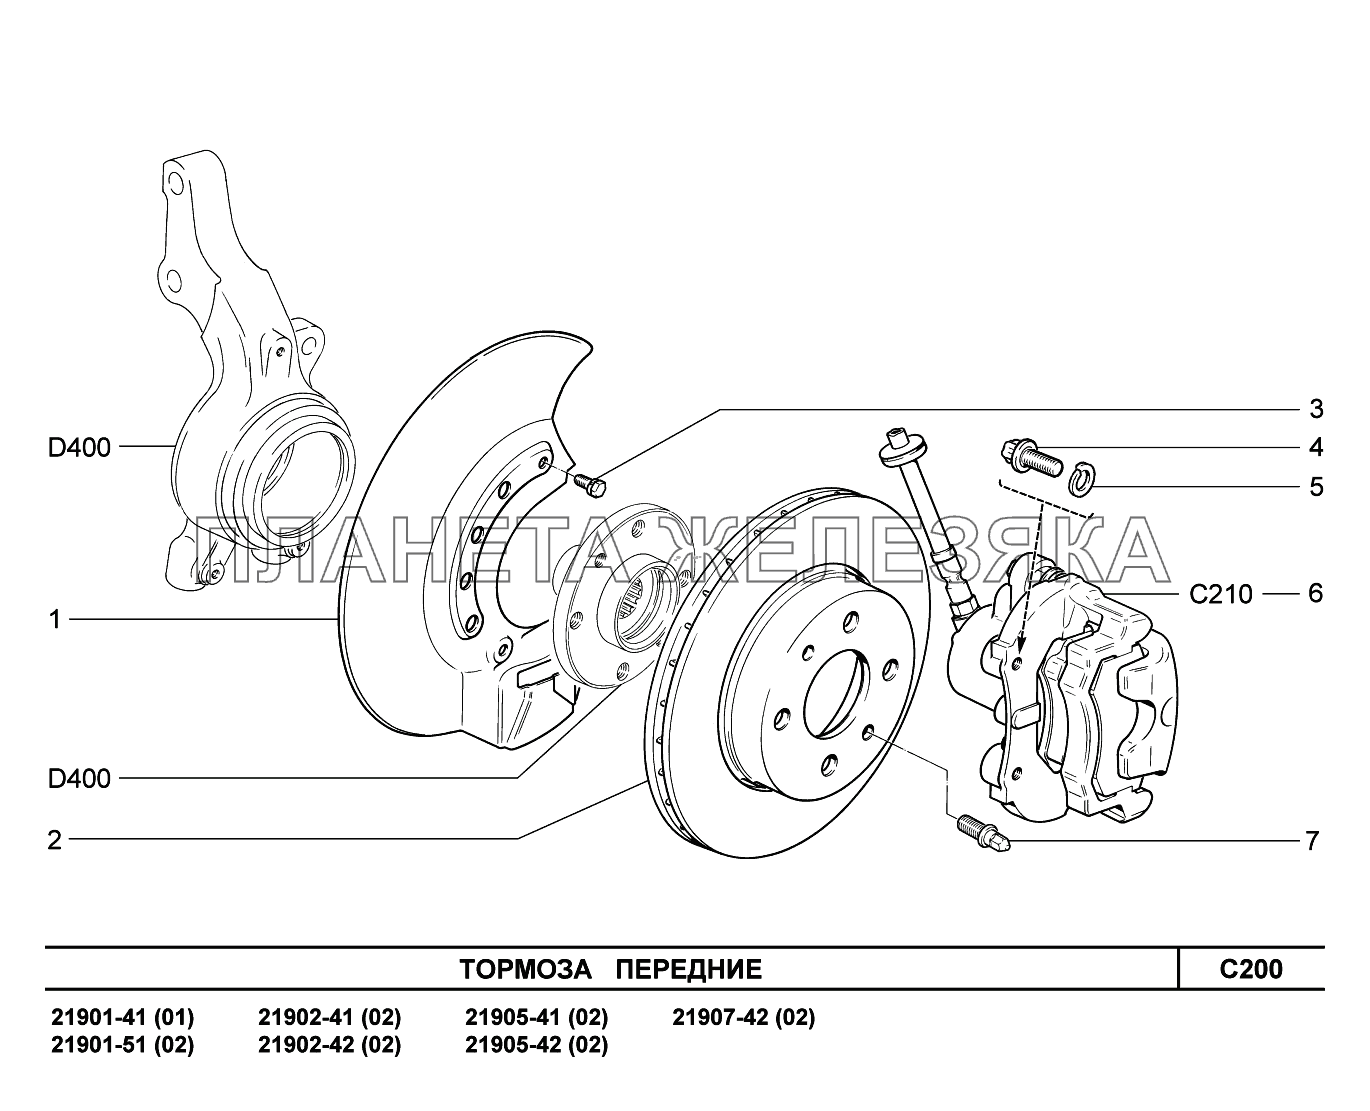 C200. Тормоза передние Lada Granta-2190